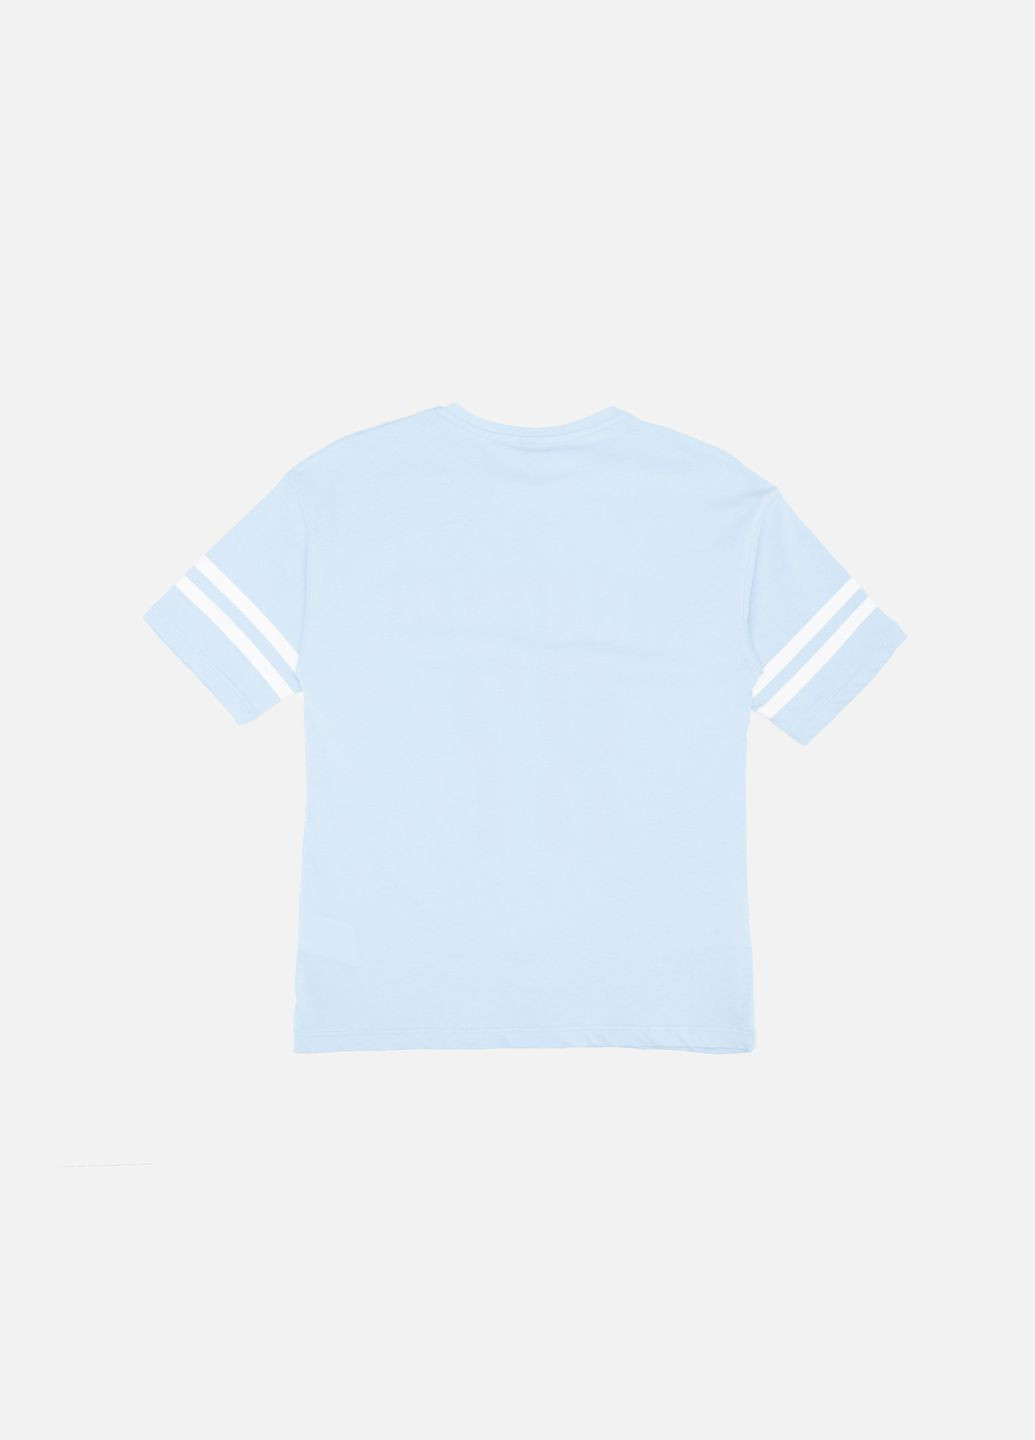 Голубая летняя футболка с коротким рукавом для мальчика цвет голубой цб-00242376 Beneti